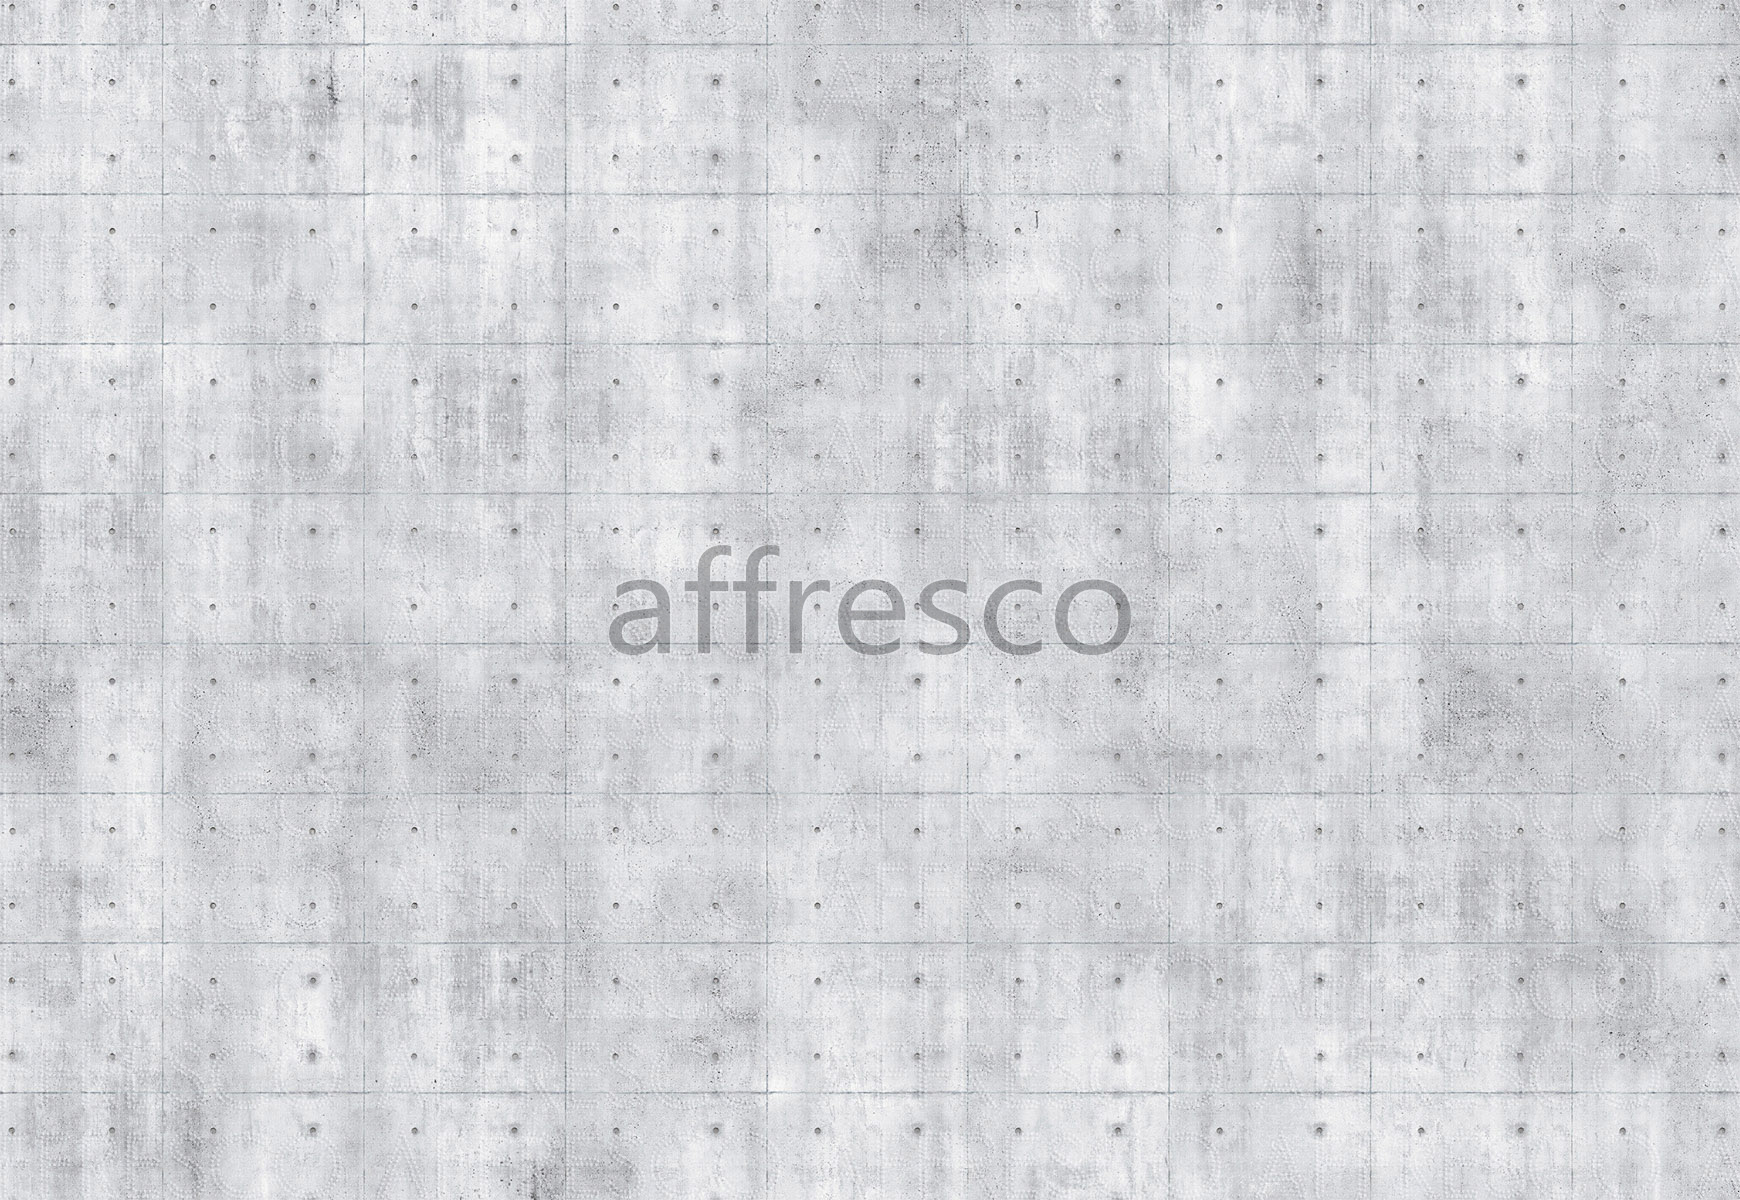 ID135607 | Textures | Стена с заклепками | Affresco Factory